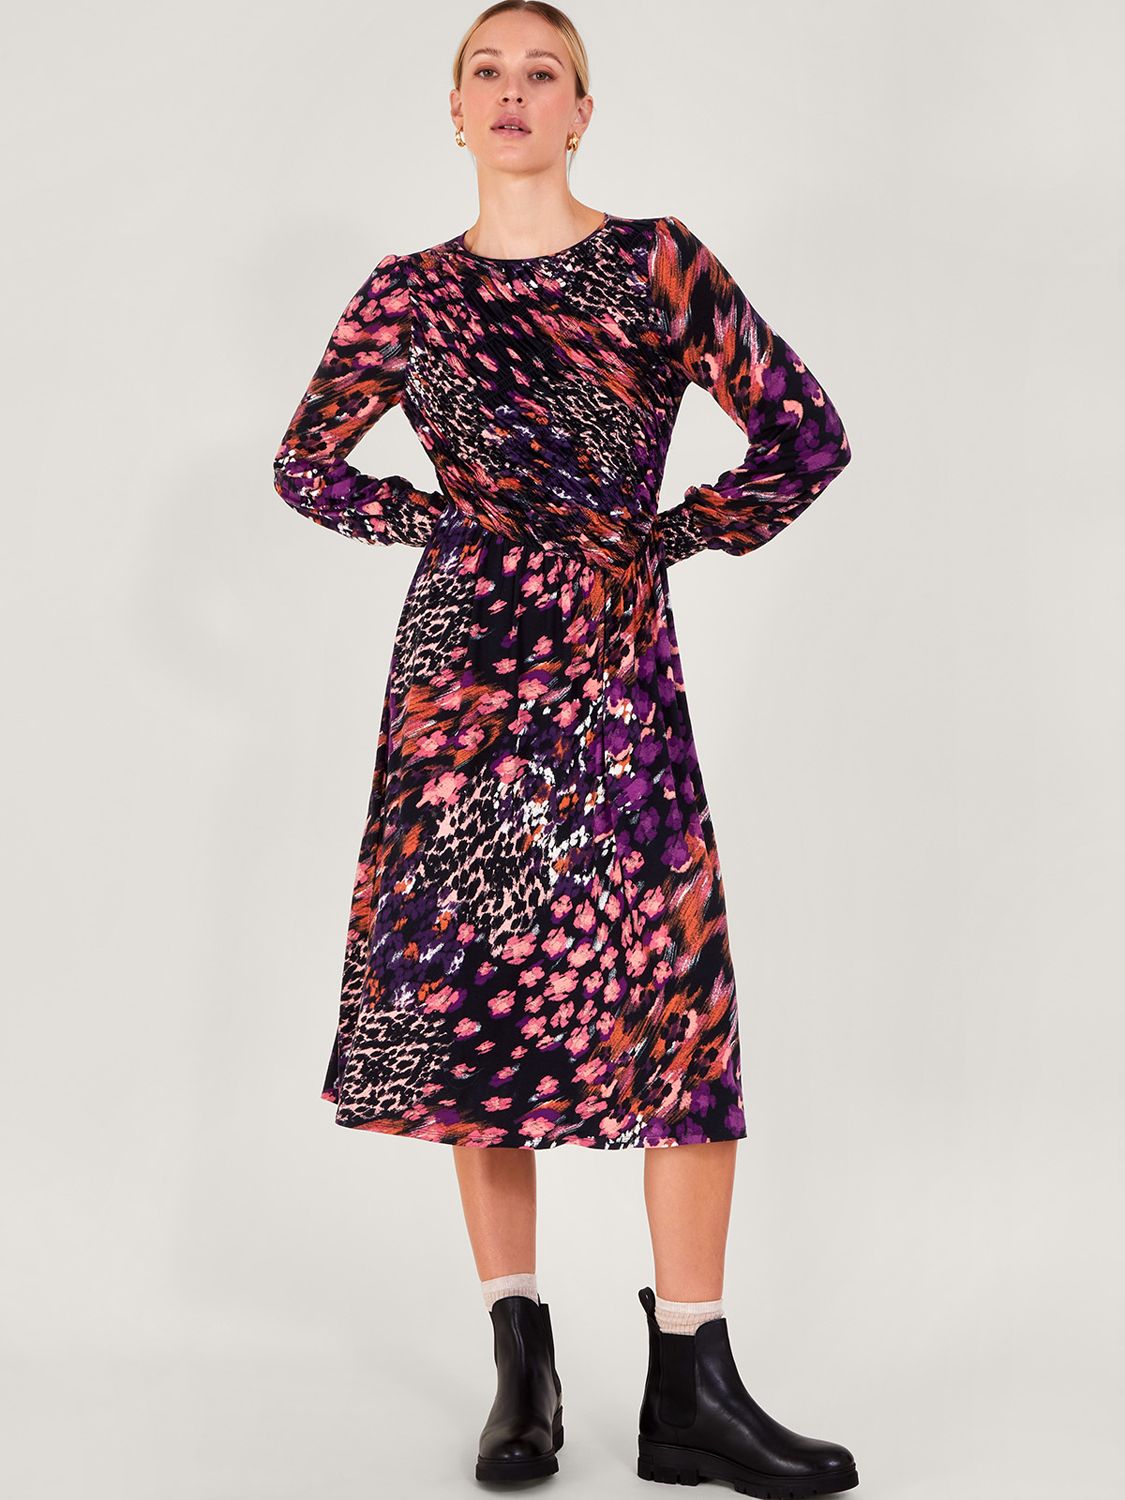 Monsoon Genesis Animal Print Dress, Black/Multi at John Lewis & Partners